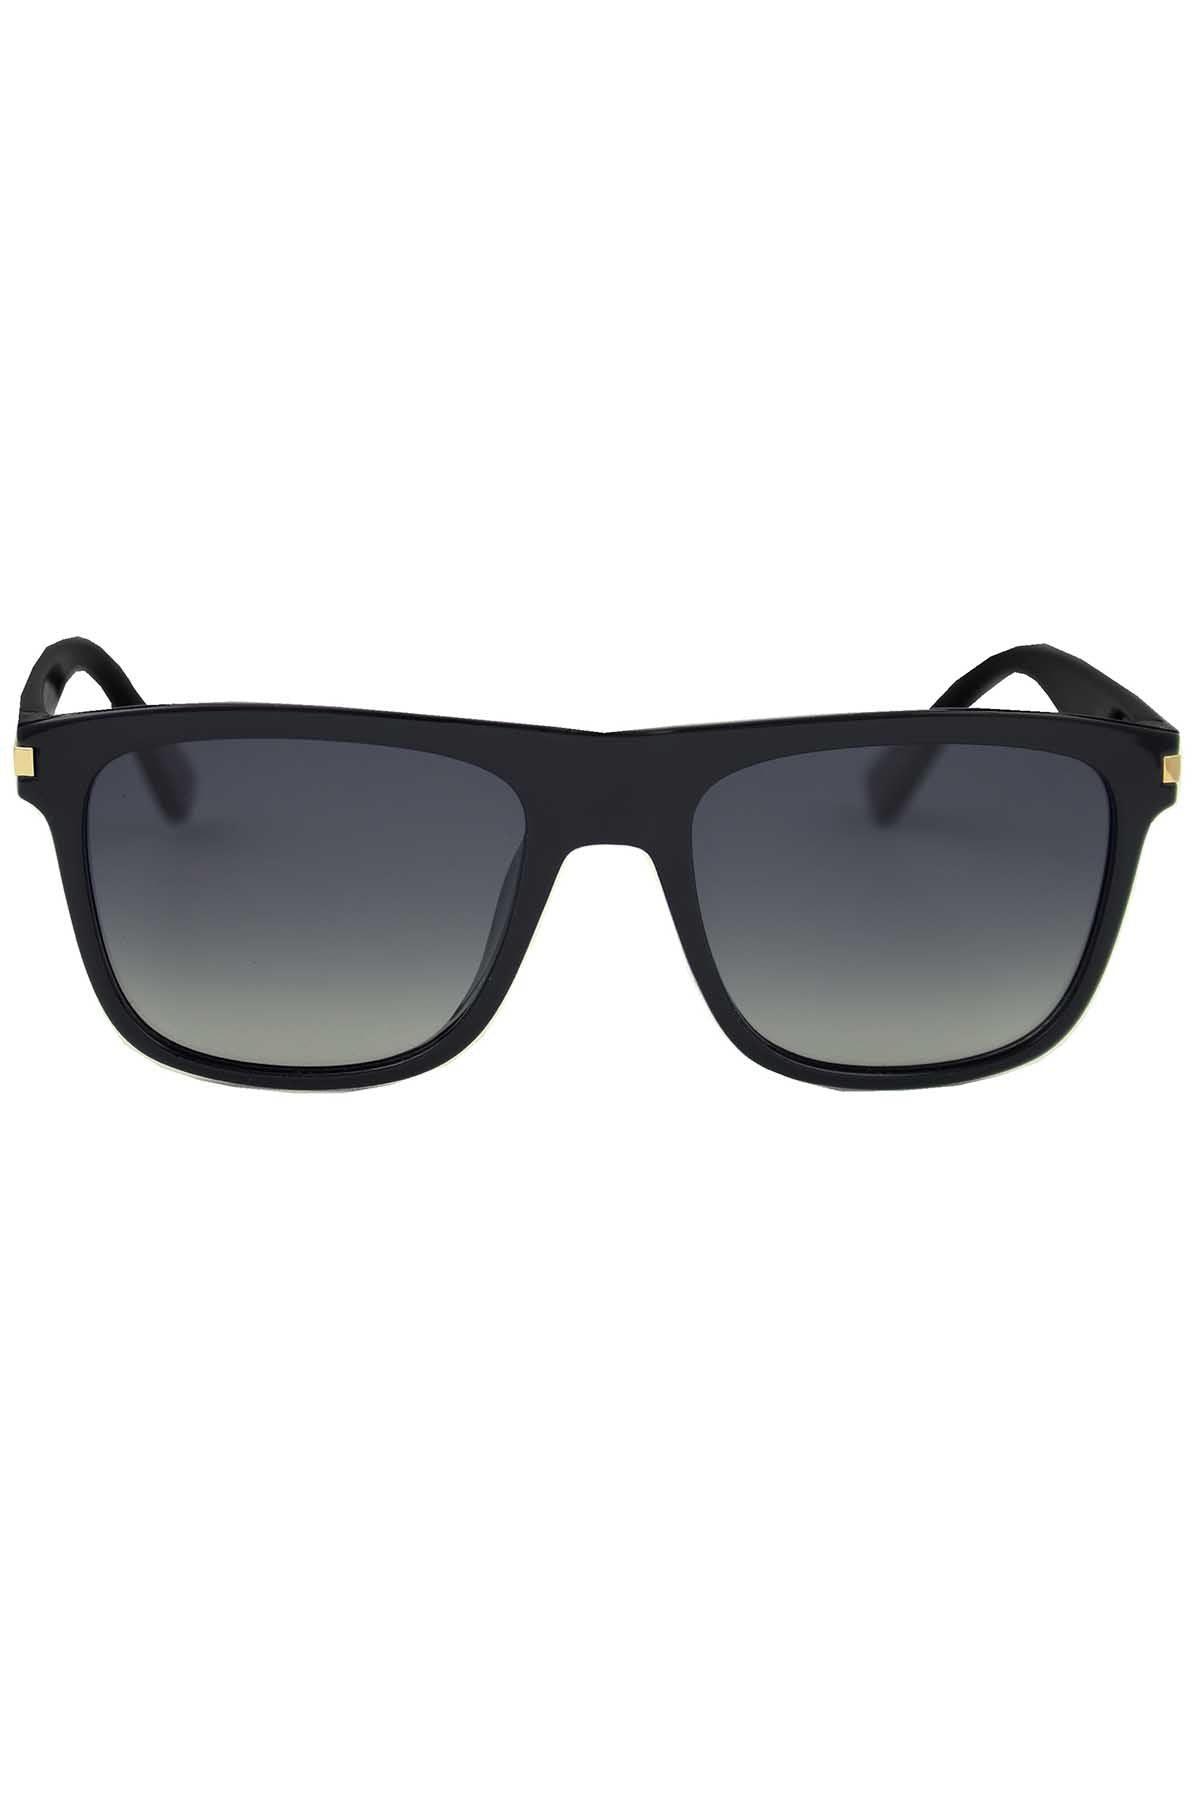 DIBI Black Nice Sunglasses